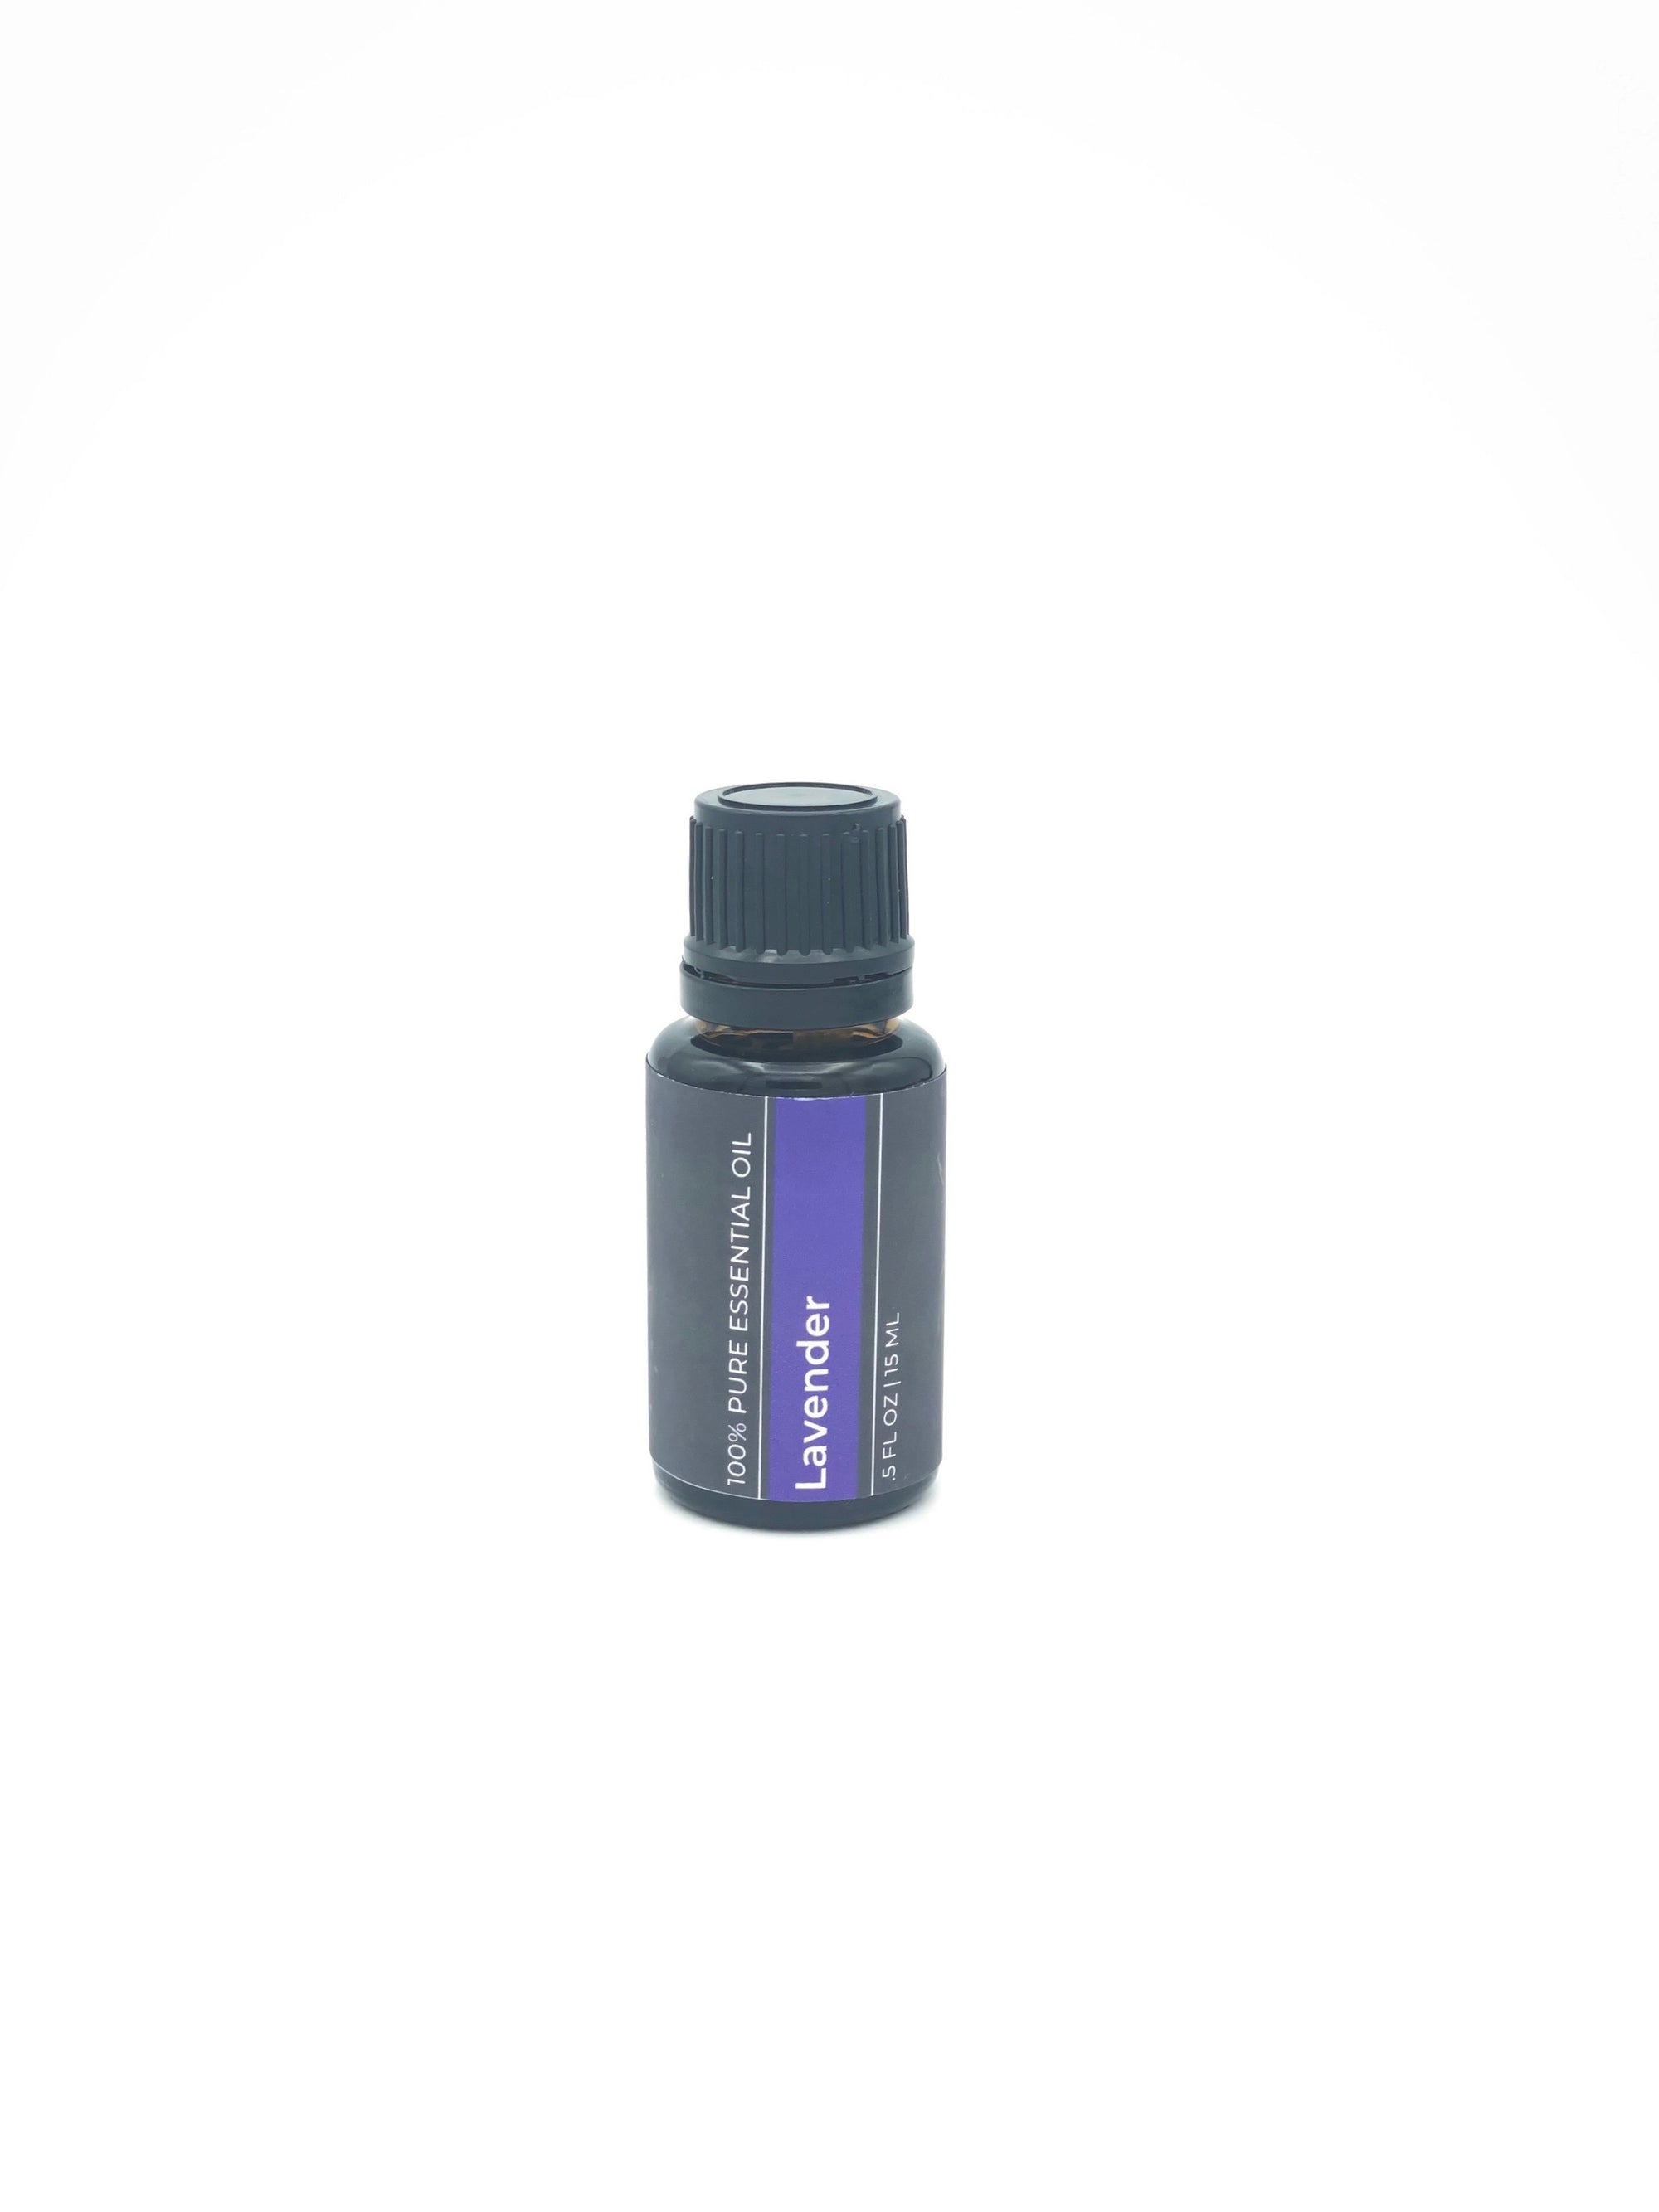 100% Pure Lavender Essential Oil from Lavender Ridge Farms